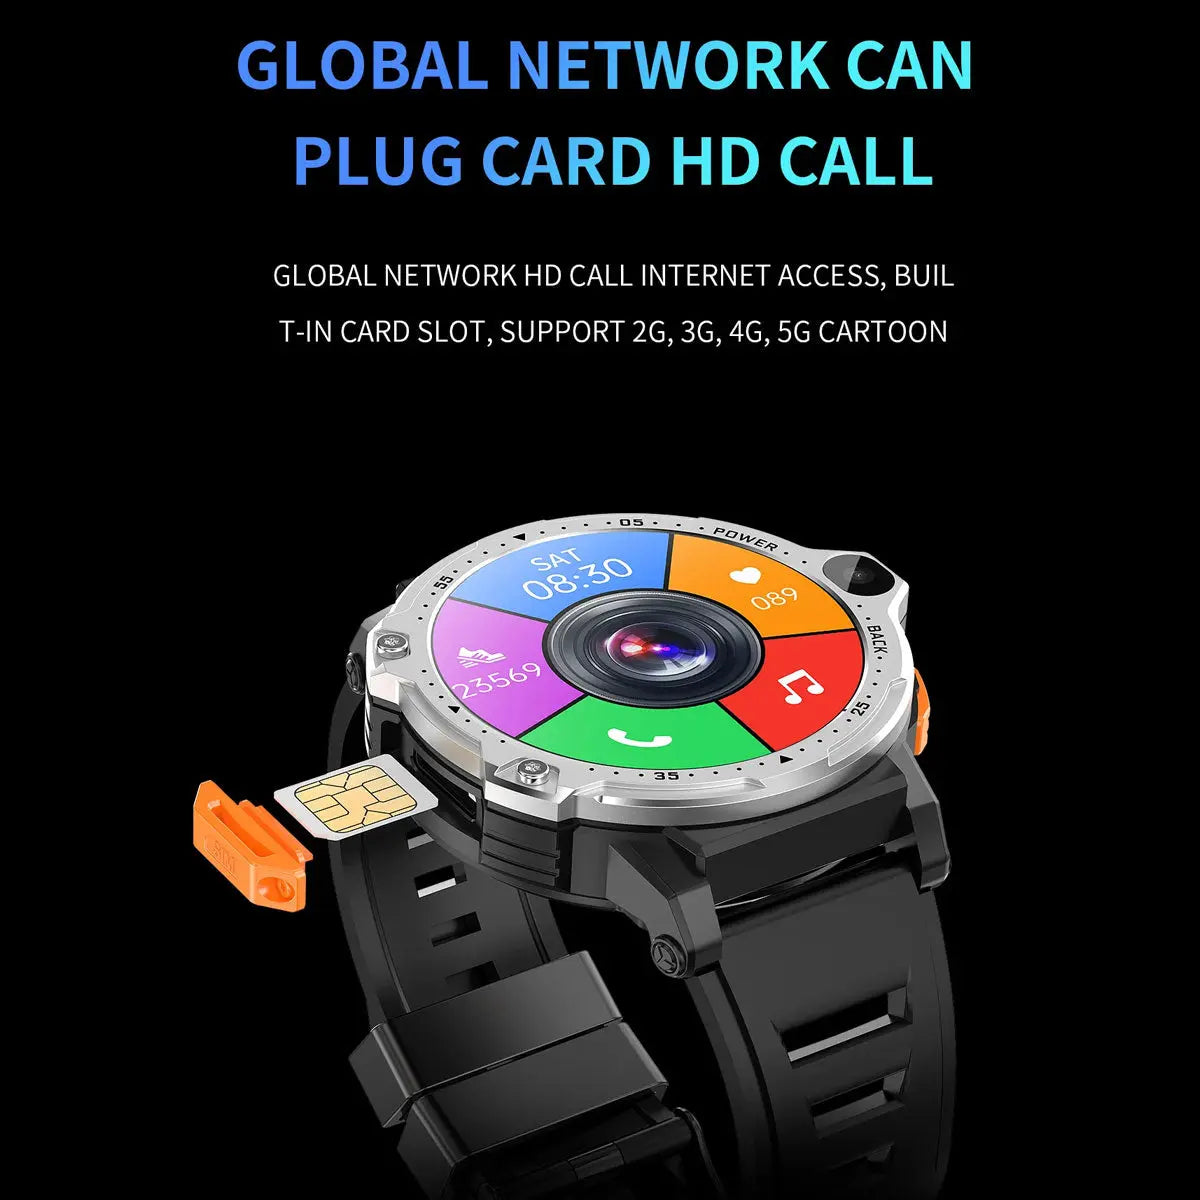 Reloj Inteligente Smartwatch Pg999 4 Cores 2 Cámaras Android 8.1 Wifi 4g Fralugio